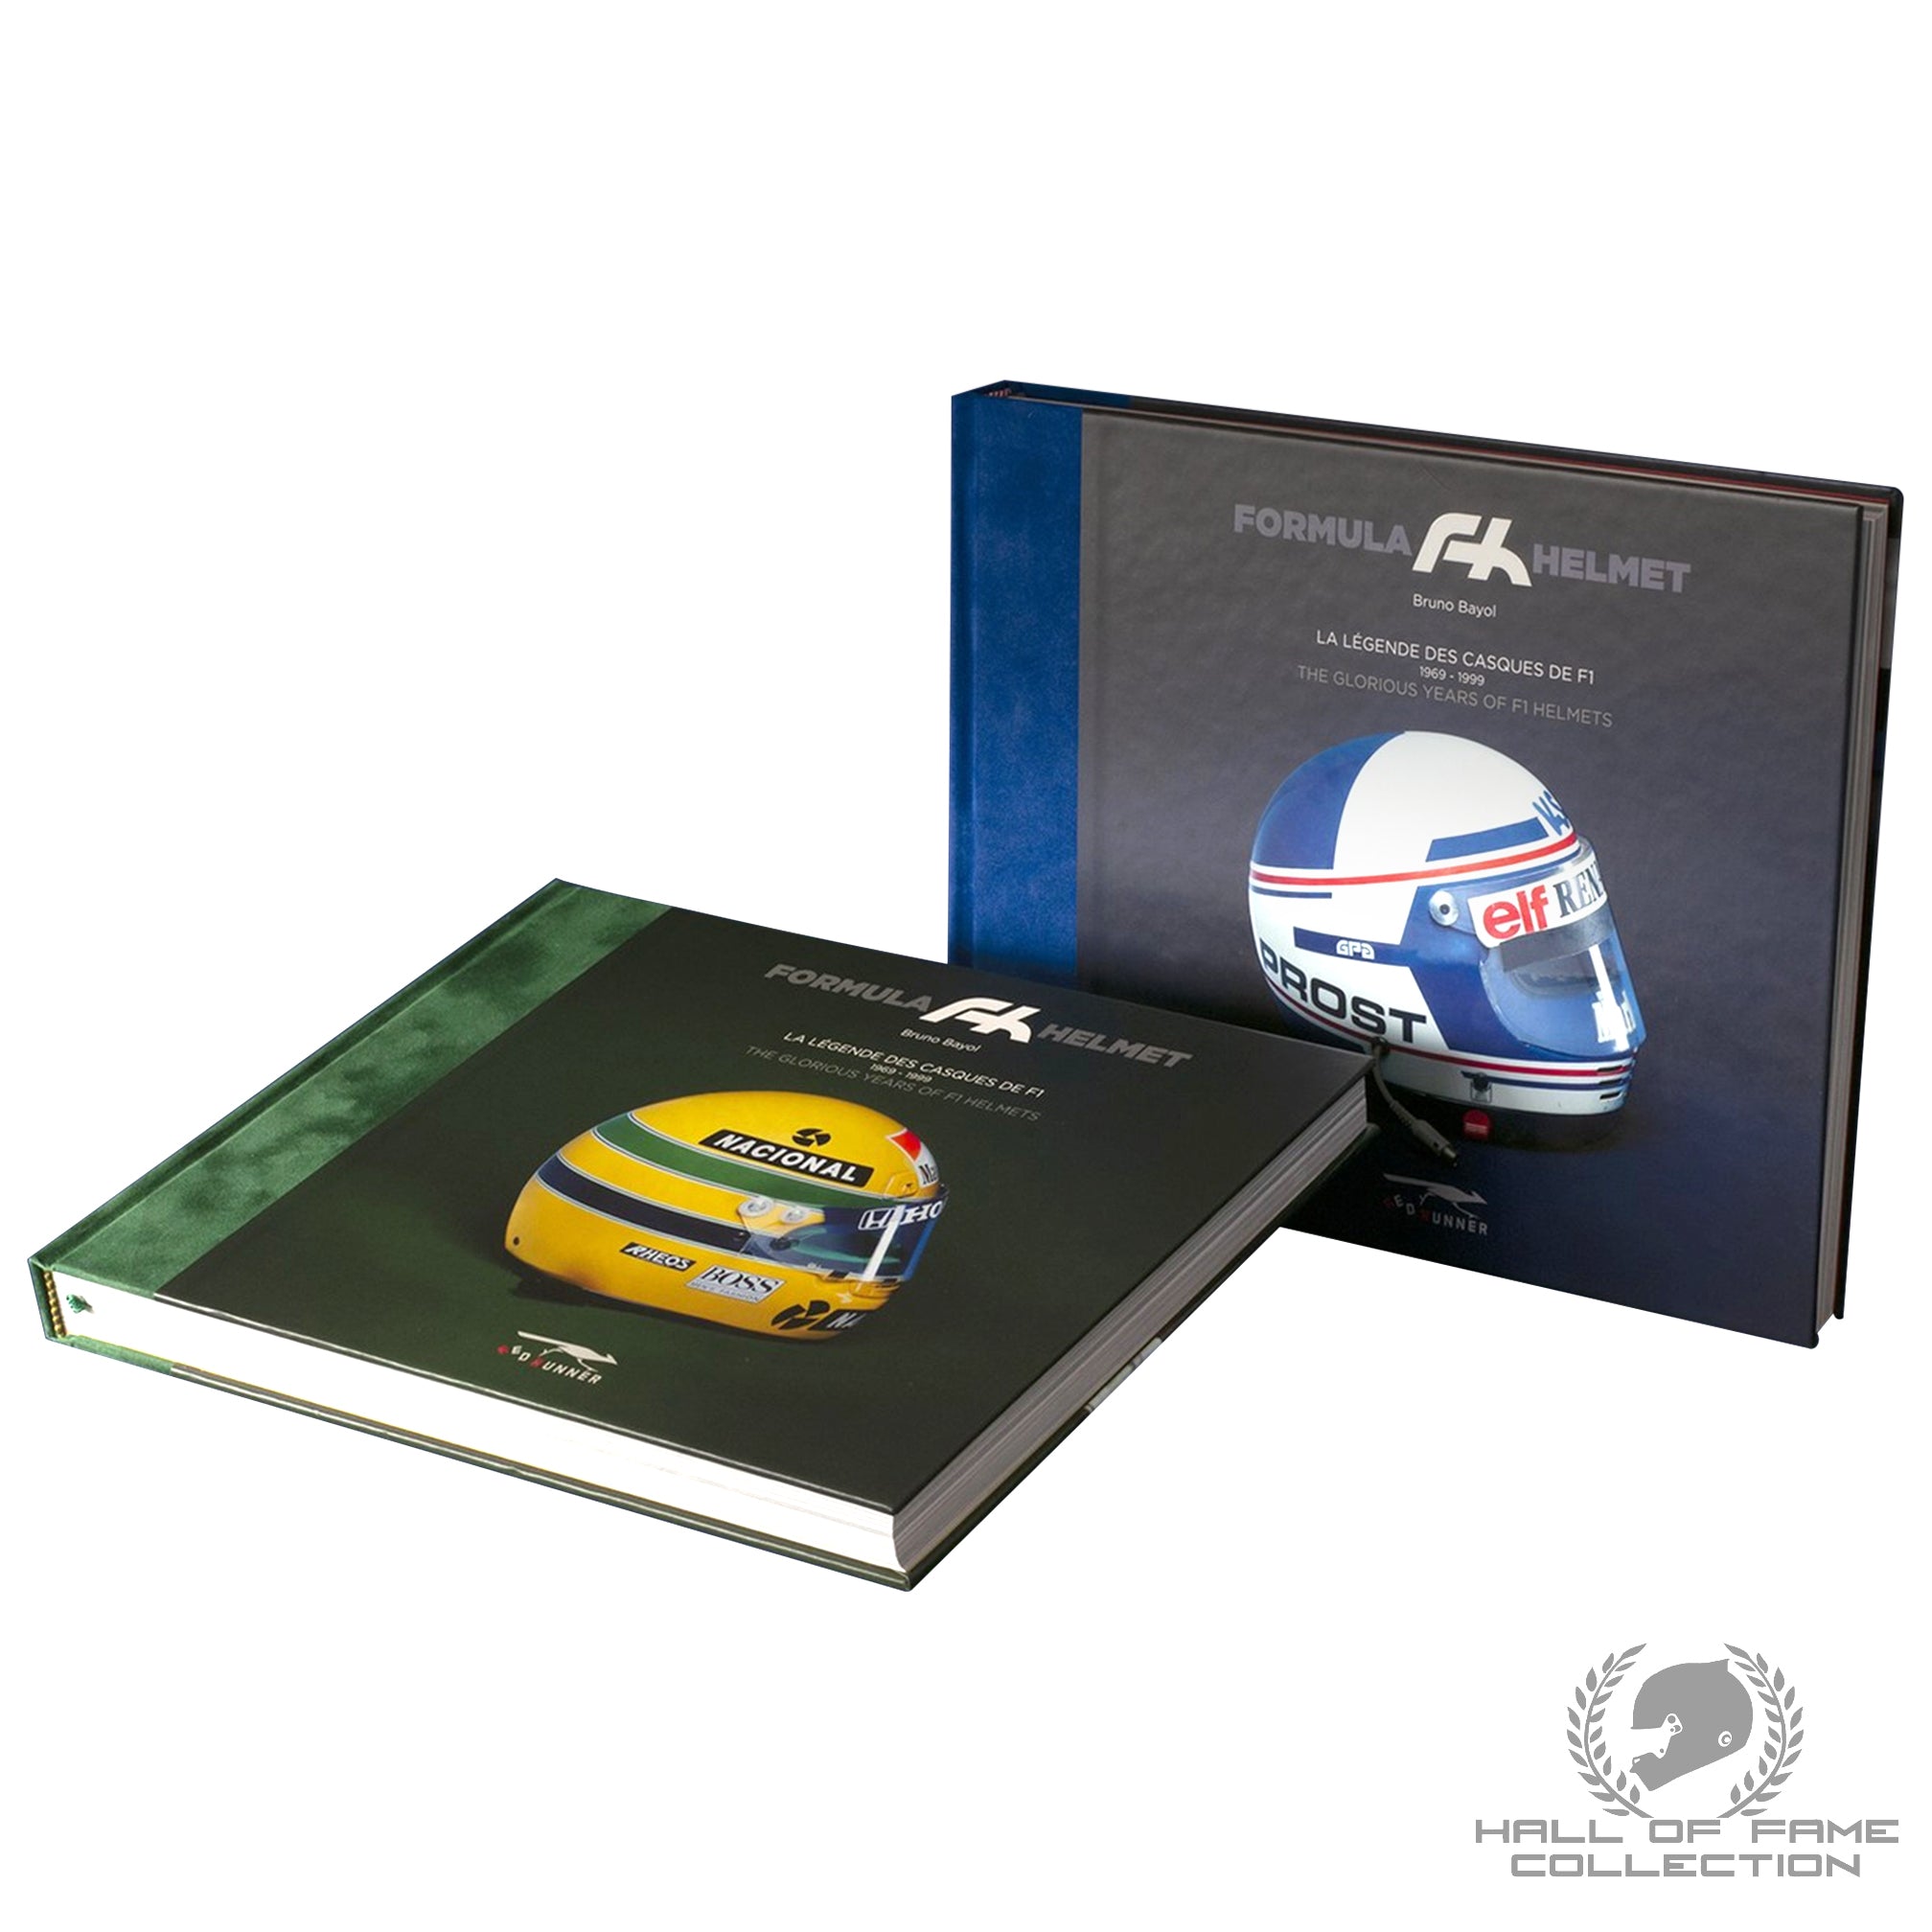 Formula Helmet "The Glorious Years of F1 Helmets 1969-1999" F1 Book